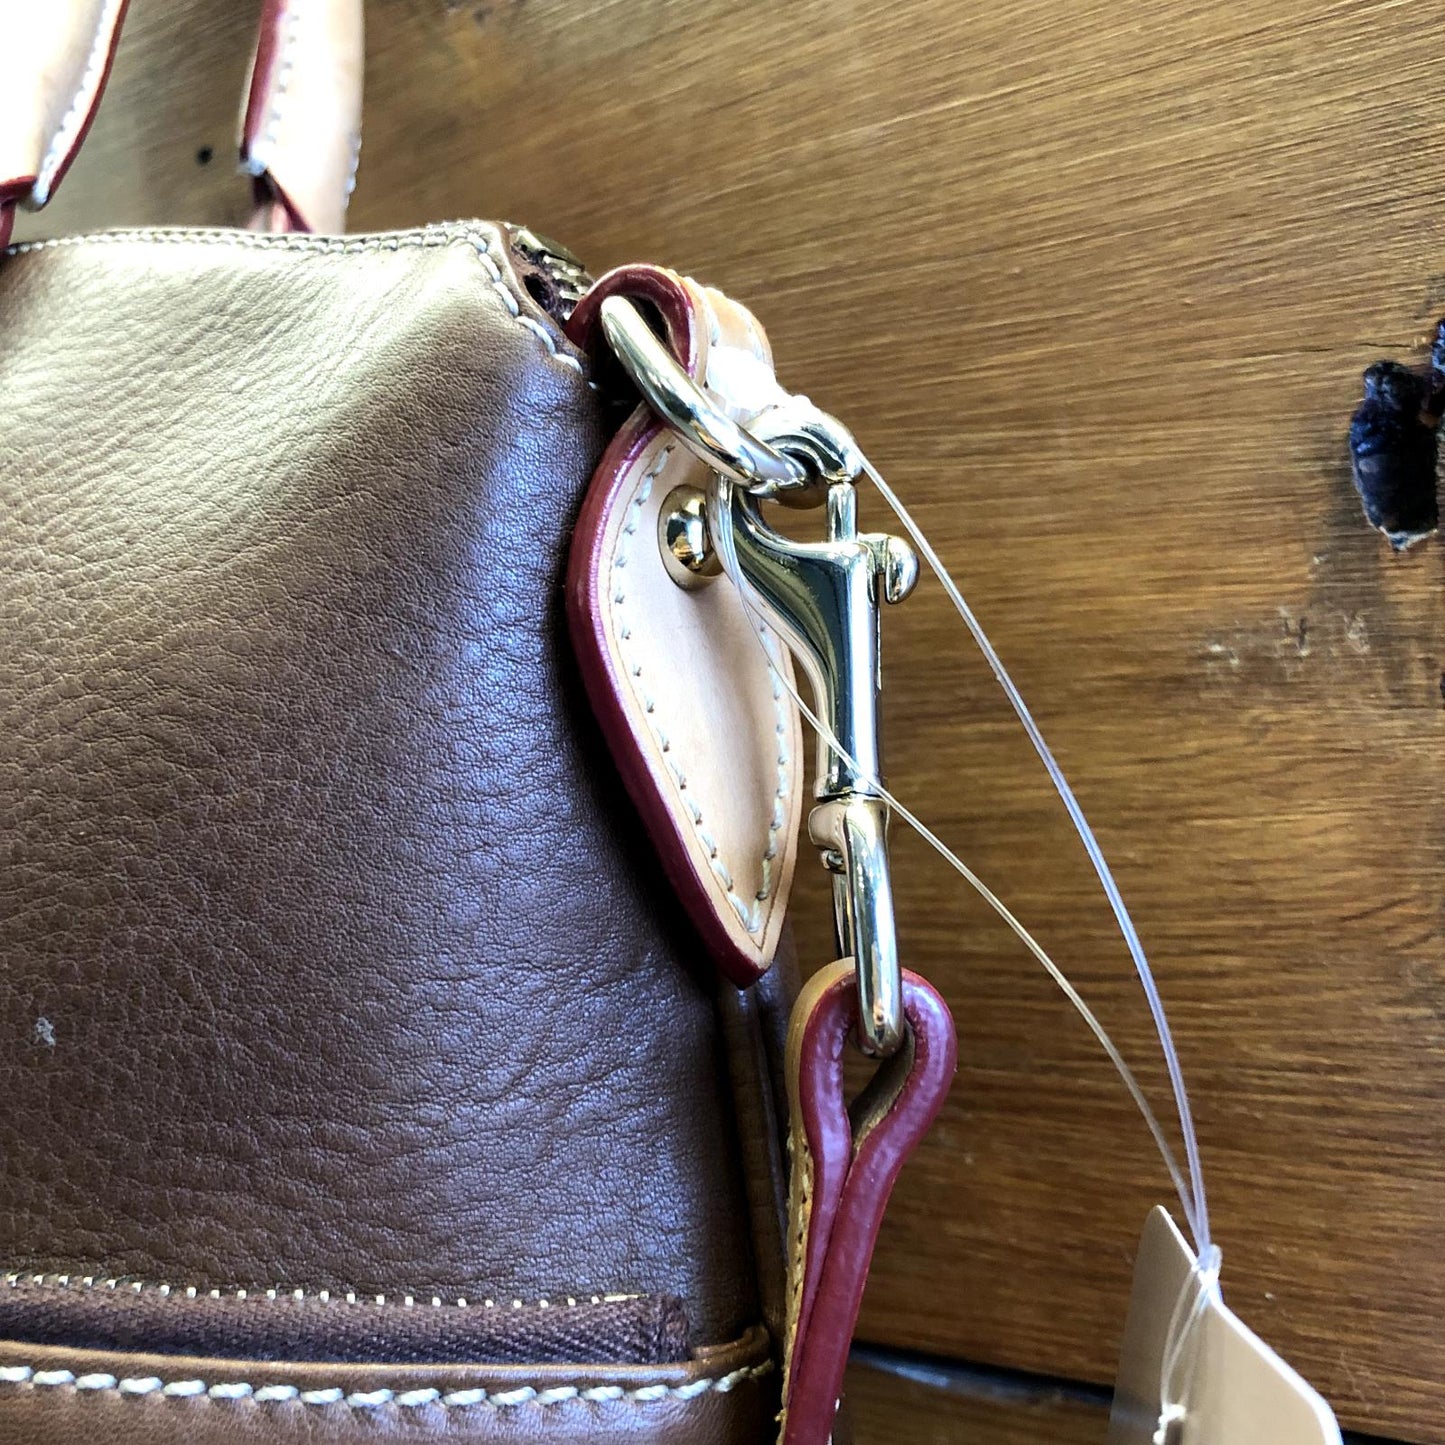 Dooney & Bourke Two Tone Brown Leather Domed Satchel Bag & Wallet 0221PG